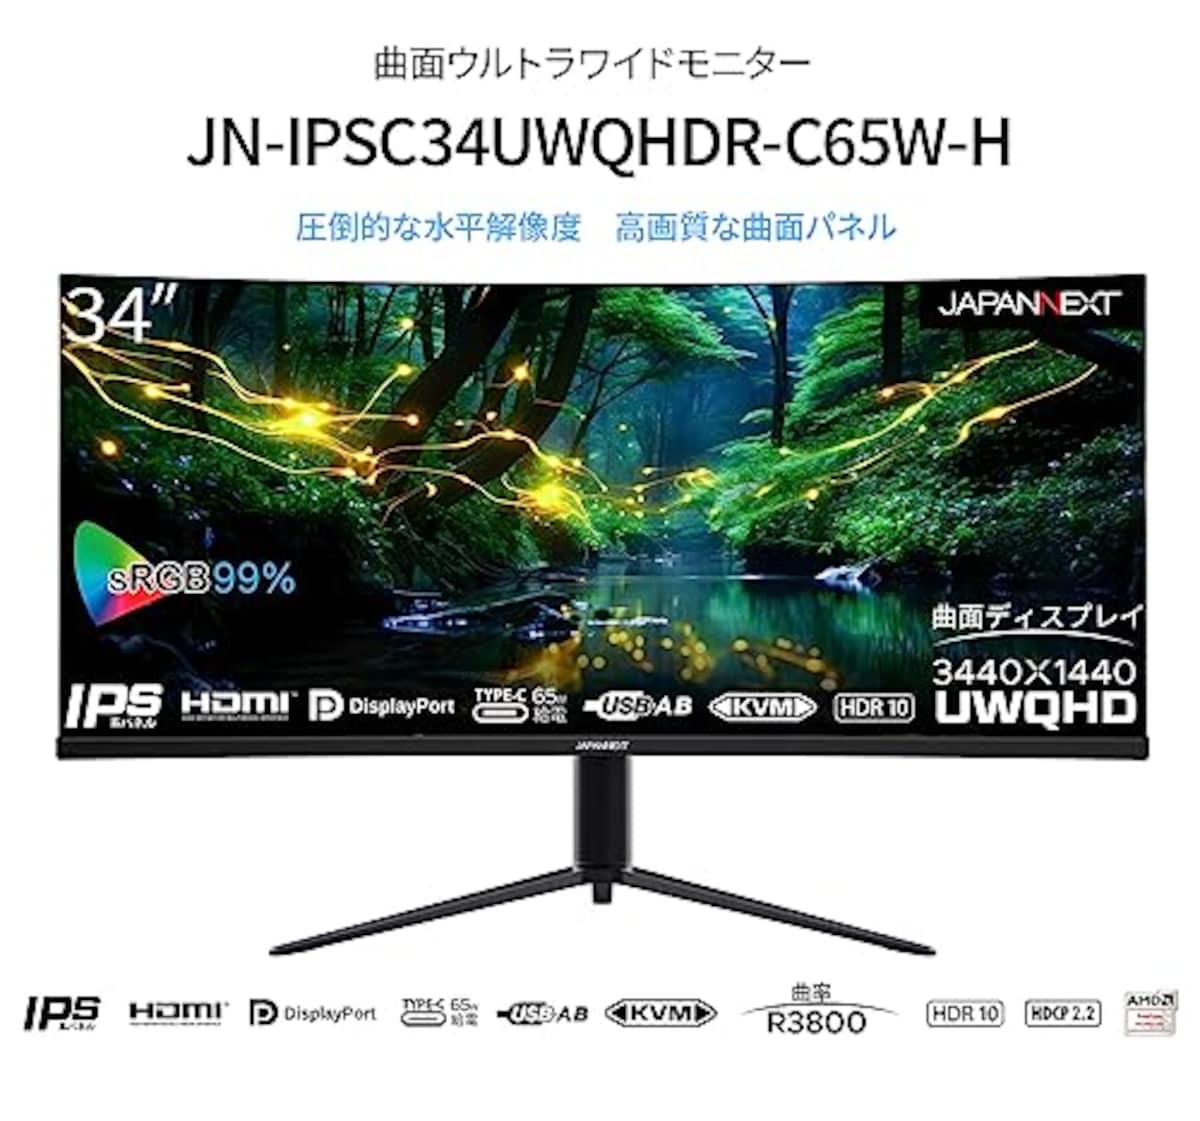  JAPANNEXT 34インチ曲面 IPSパネル UWQHD(3440 x 1440)解像度 ウルトラワイドモニター JN-IPSC34UWQHDR-C65W-H USB-C給電（最大65W） HDMI DP KVM機能 sRGB99% 昇降式スタンド画像3 